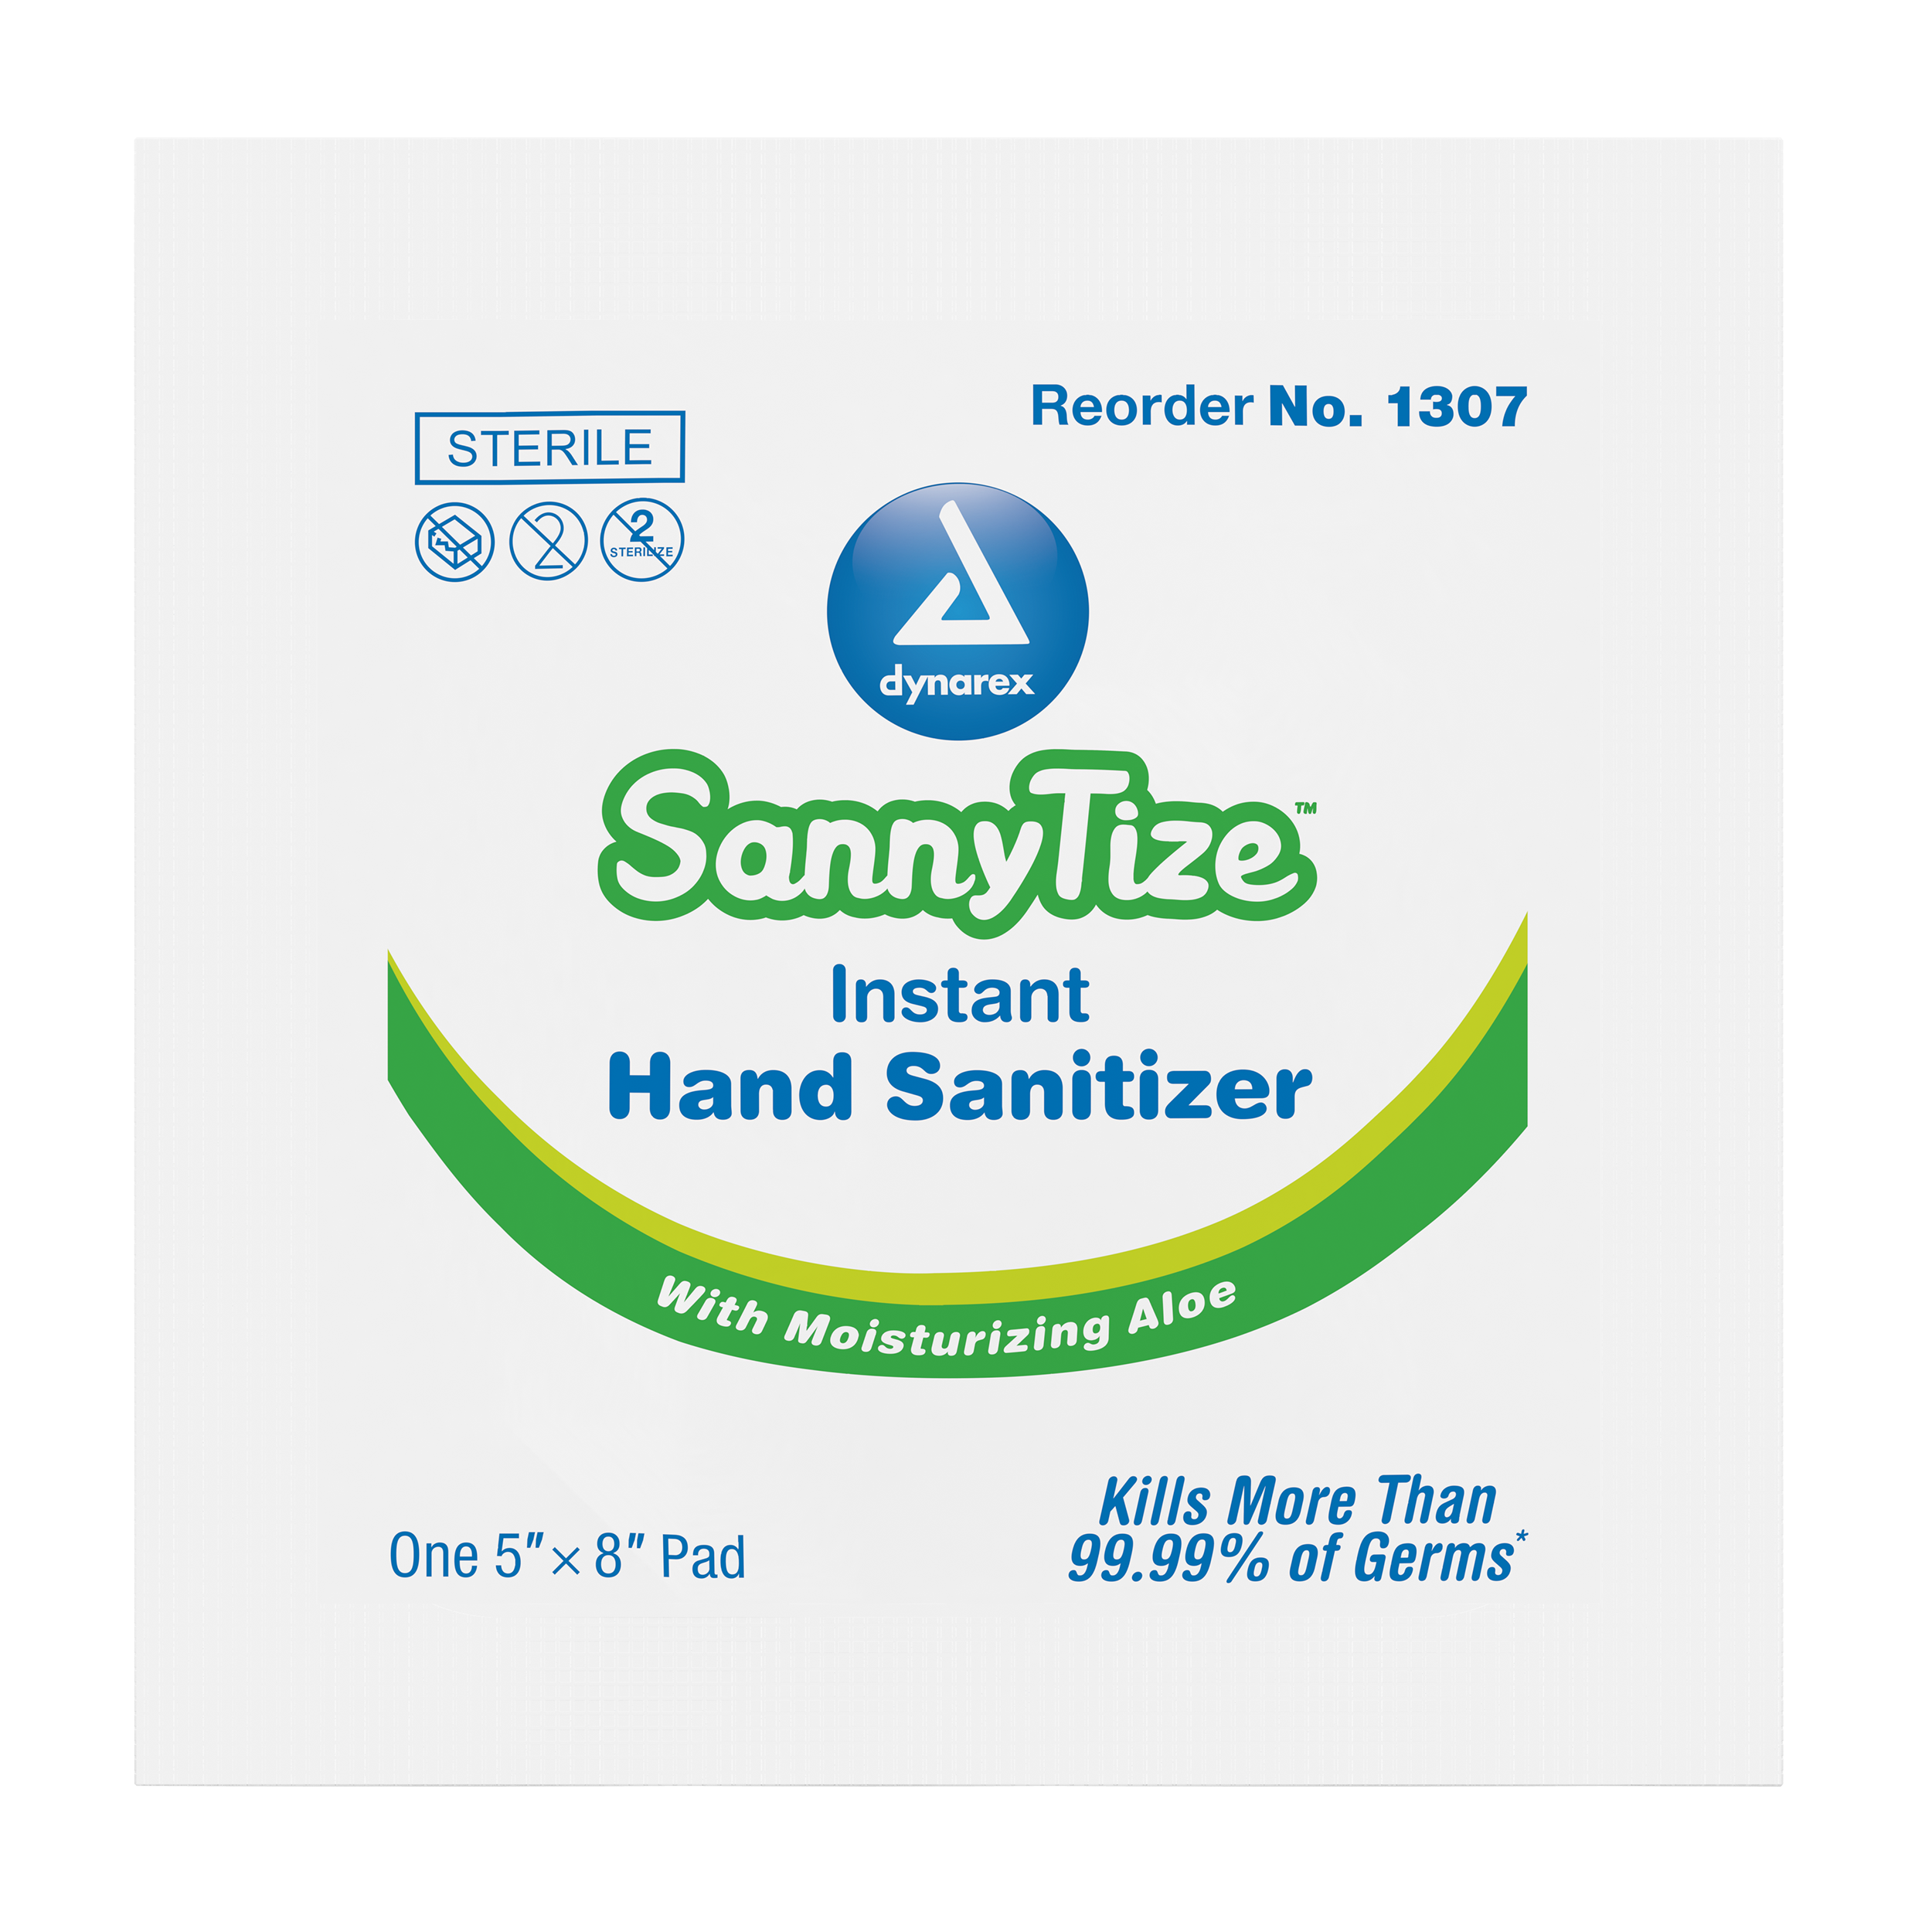 1307 Dynarex单独包装sanytizer即时洗手液雨刷饱和70%乙醇